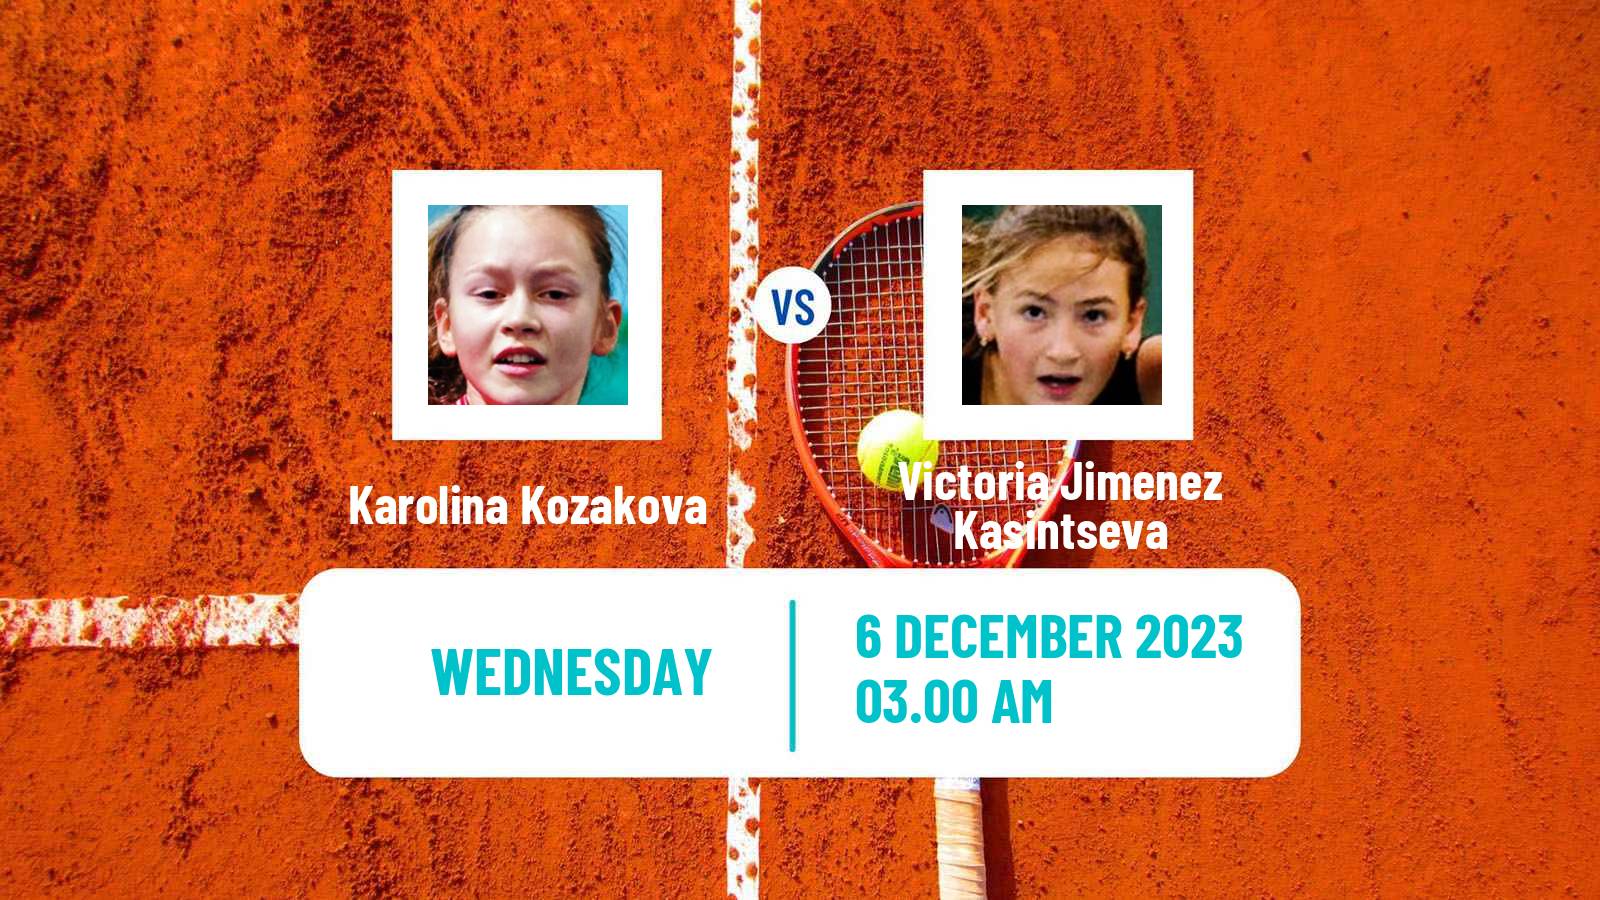 Tennis ITF W25 Monastir 5 Women Karolina Kozakova - Victoria Jimenez Kasintseva